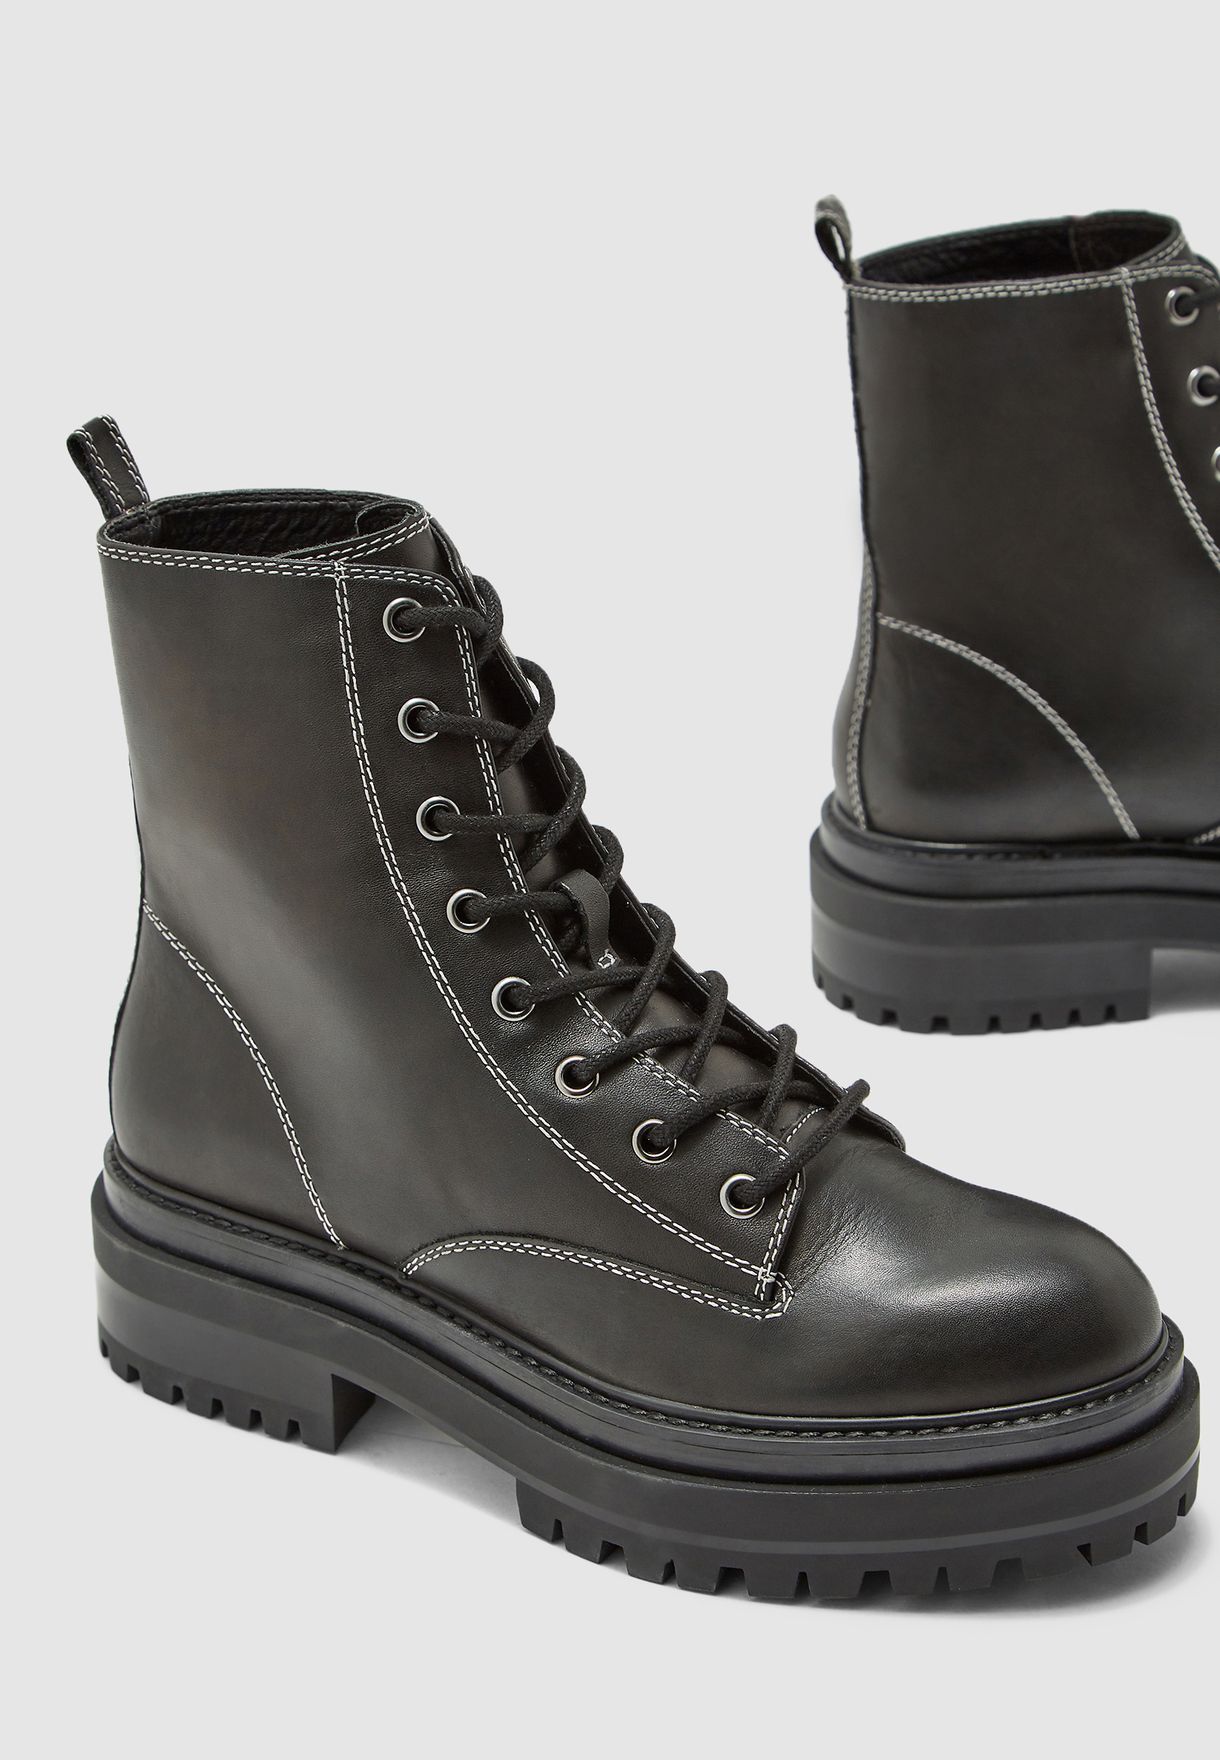 topshop black lace up boots